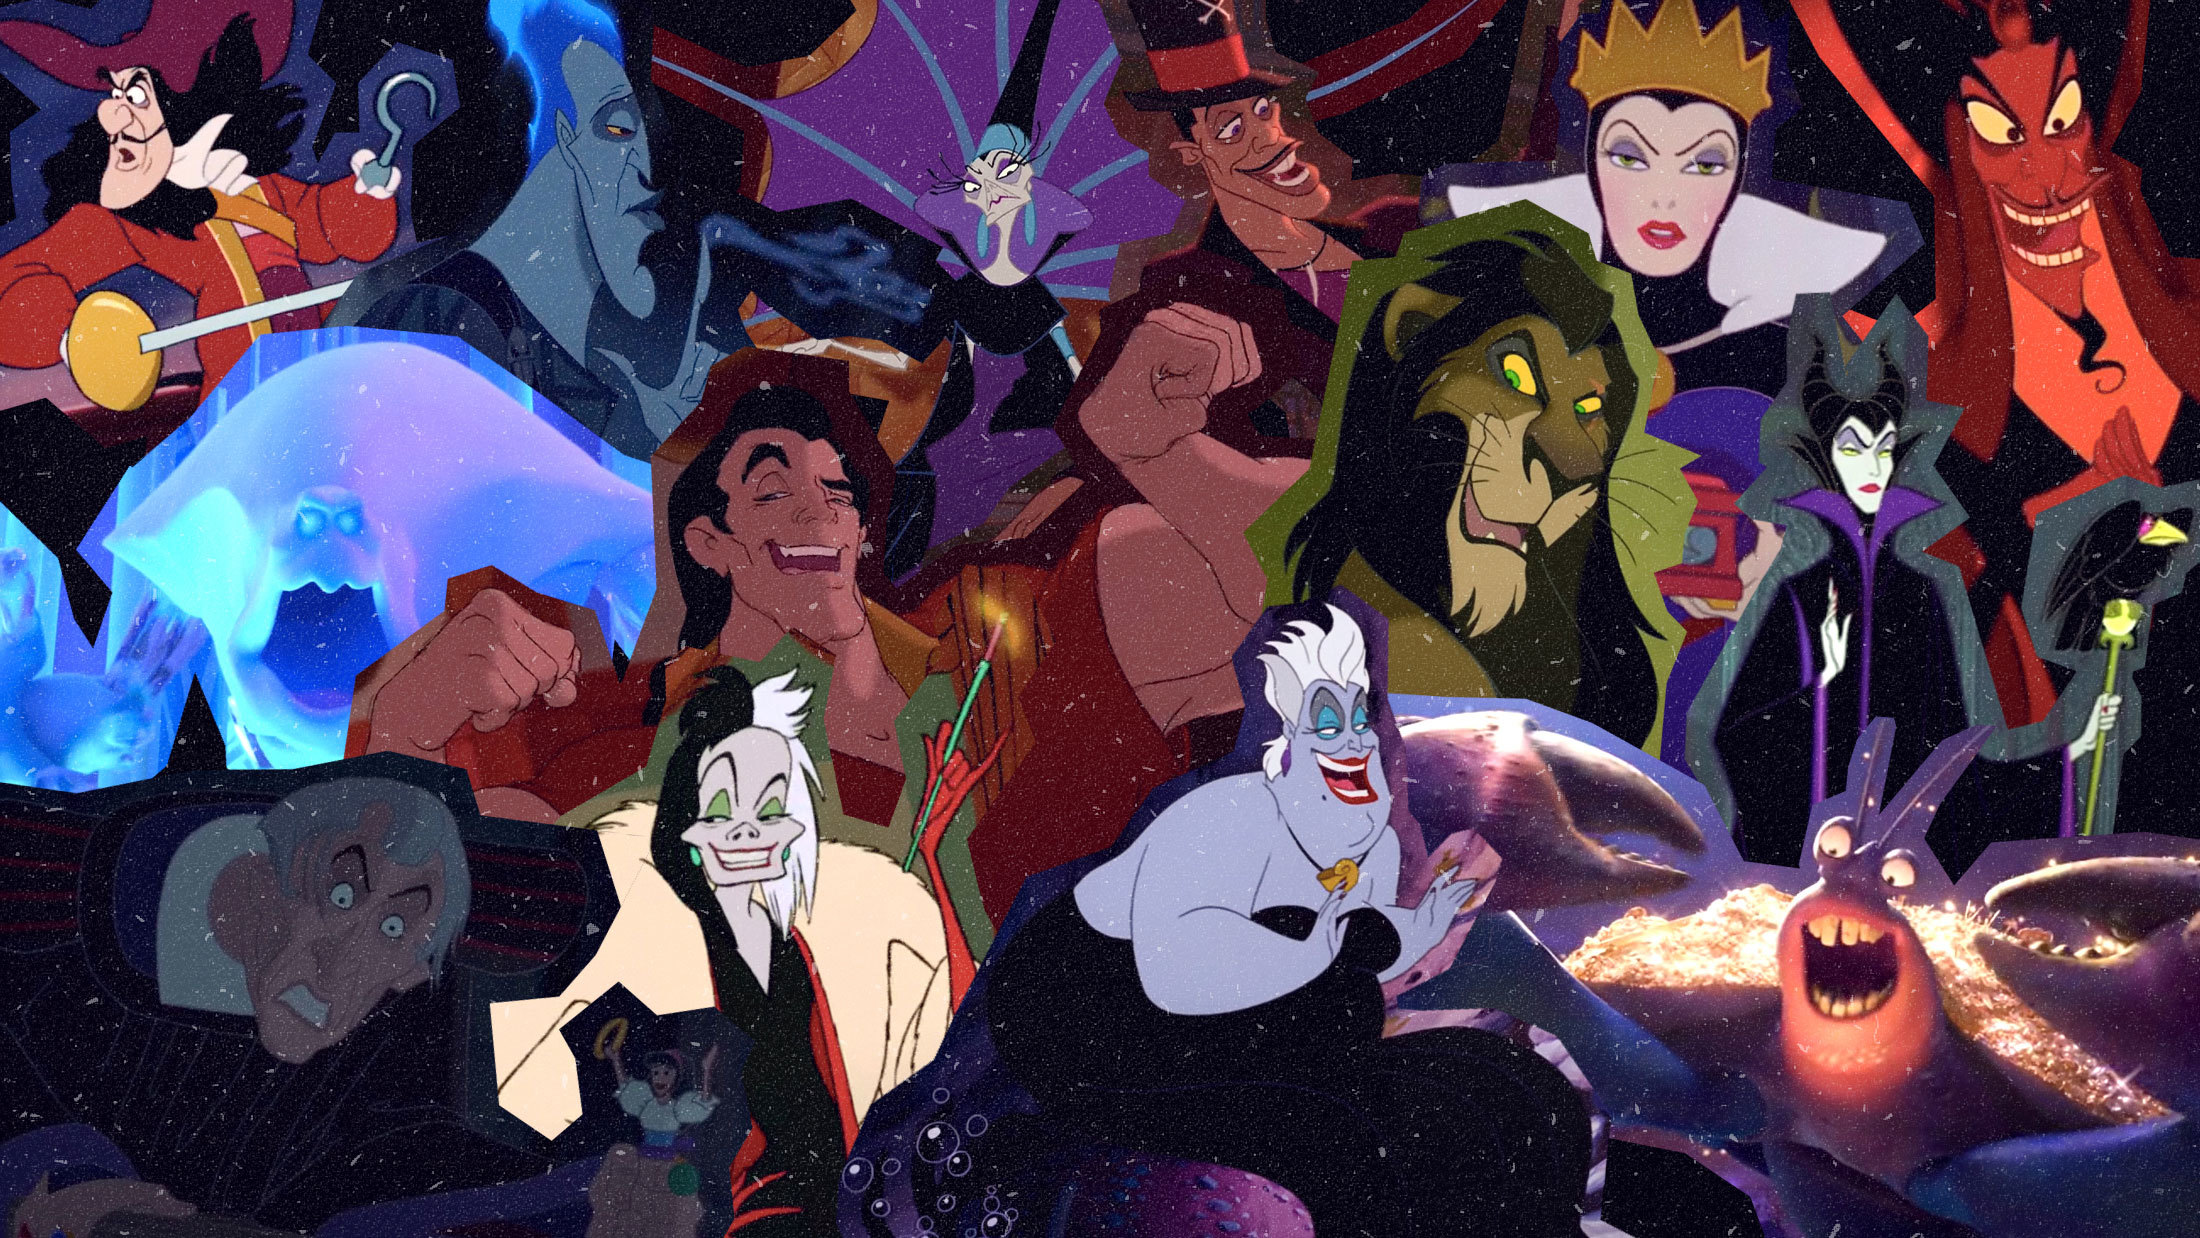 The 20 most metal Disney villains – ranked